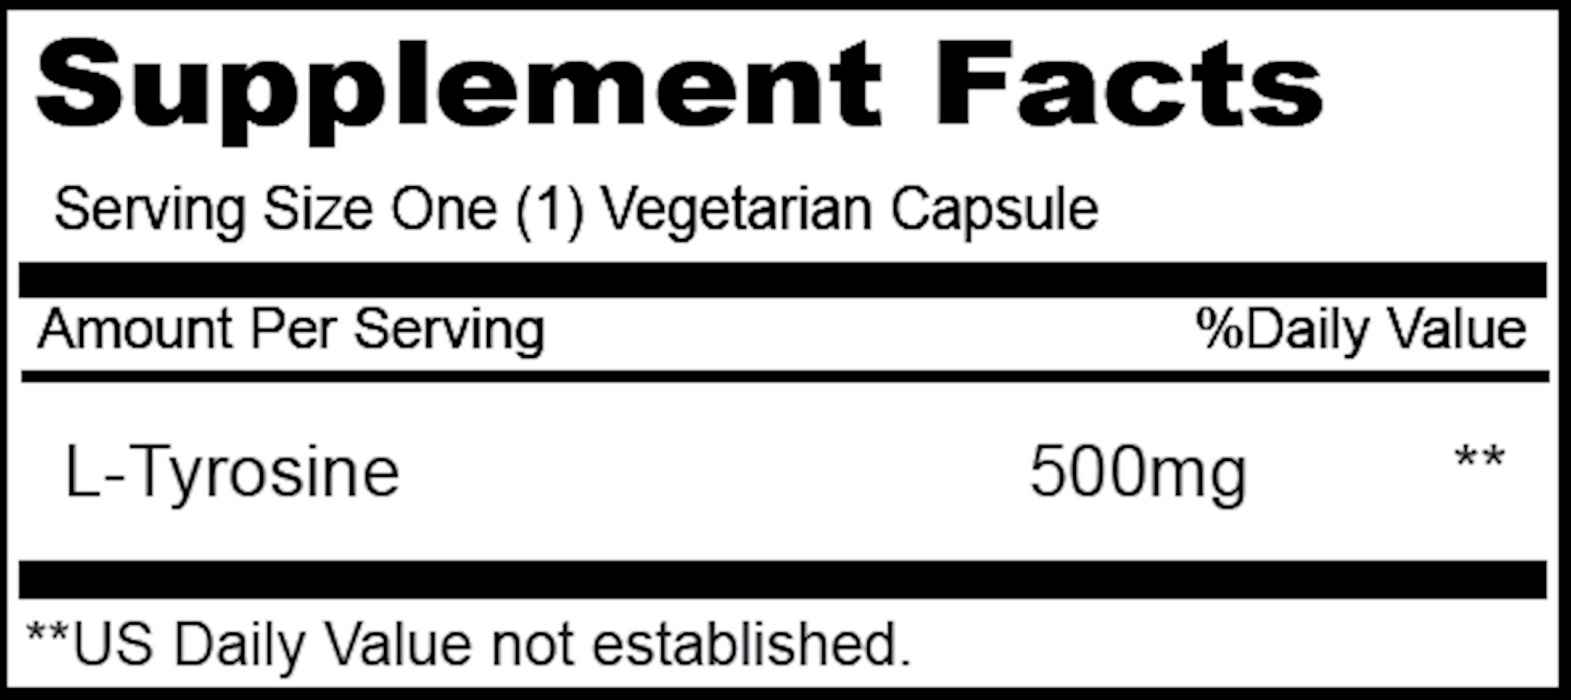 Priority One Vitamins L-Tyrosine 500 mg 60 vcaps